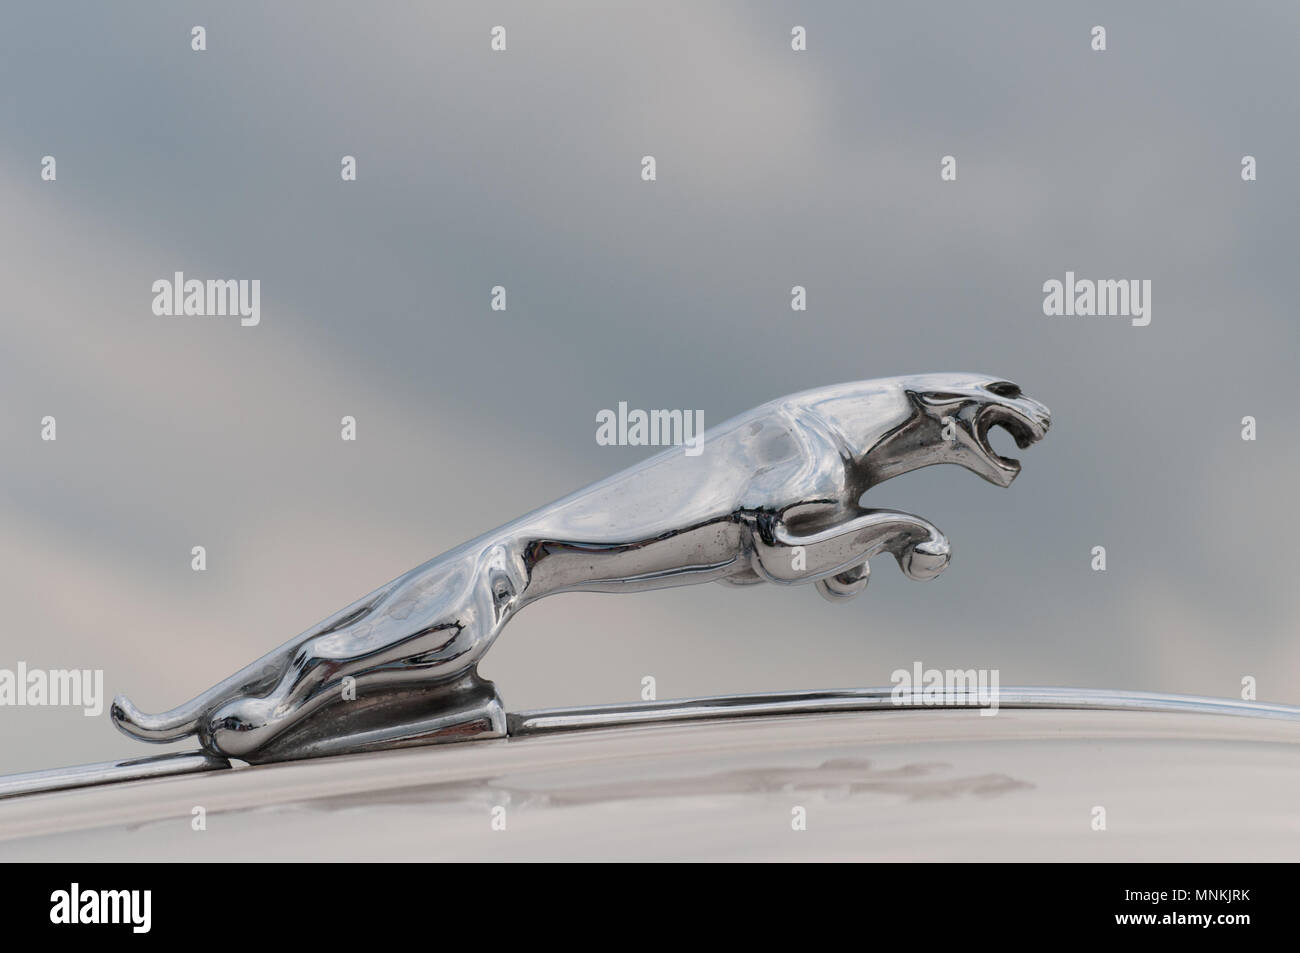 Jaguar Car Marque Stock Photo